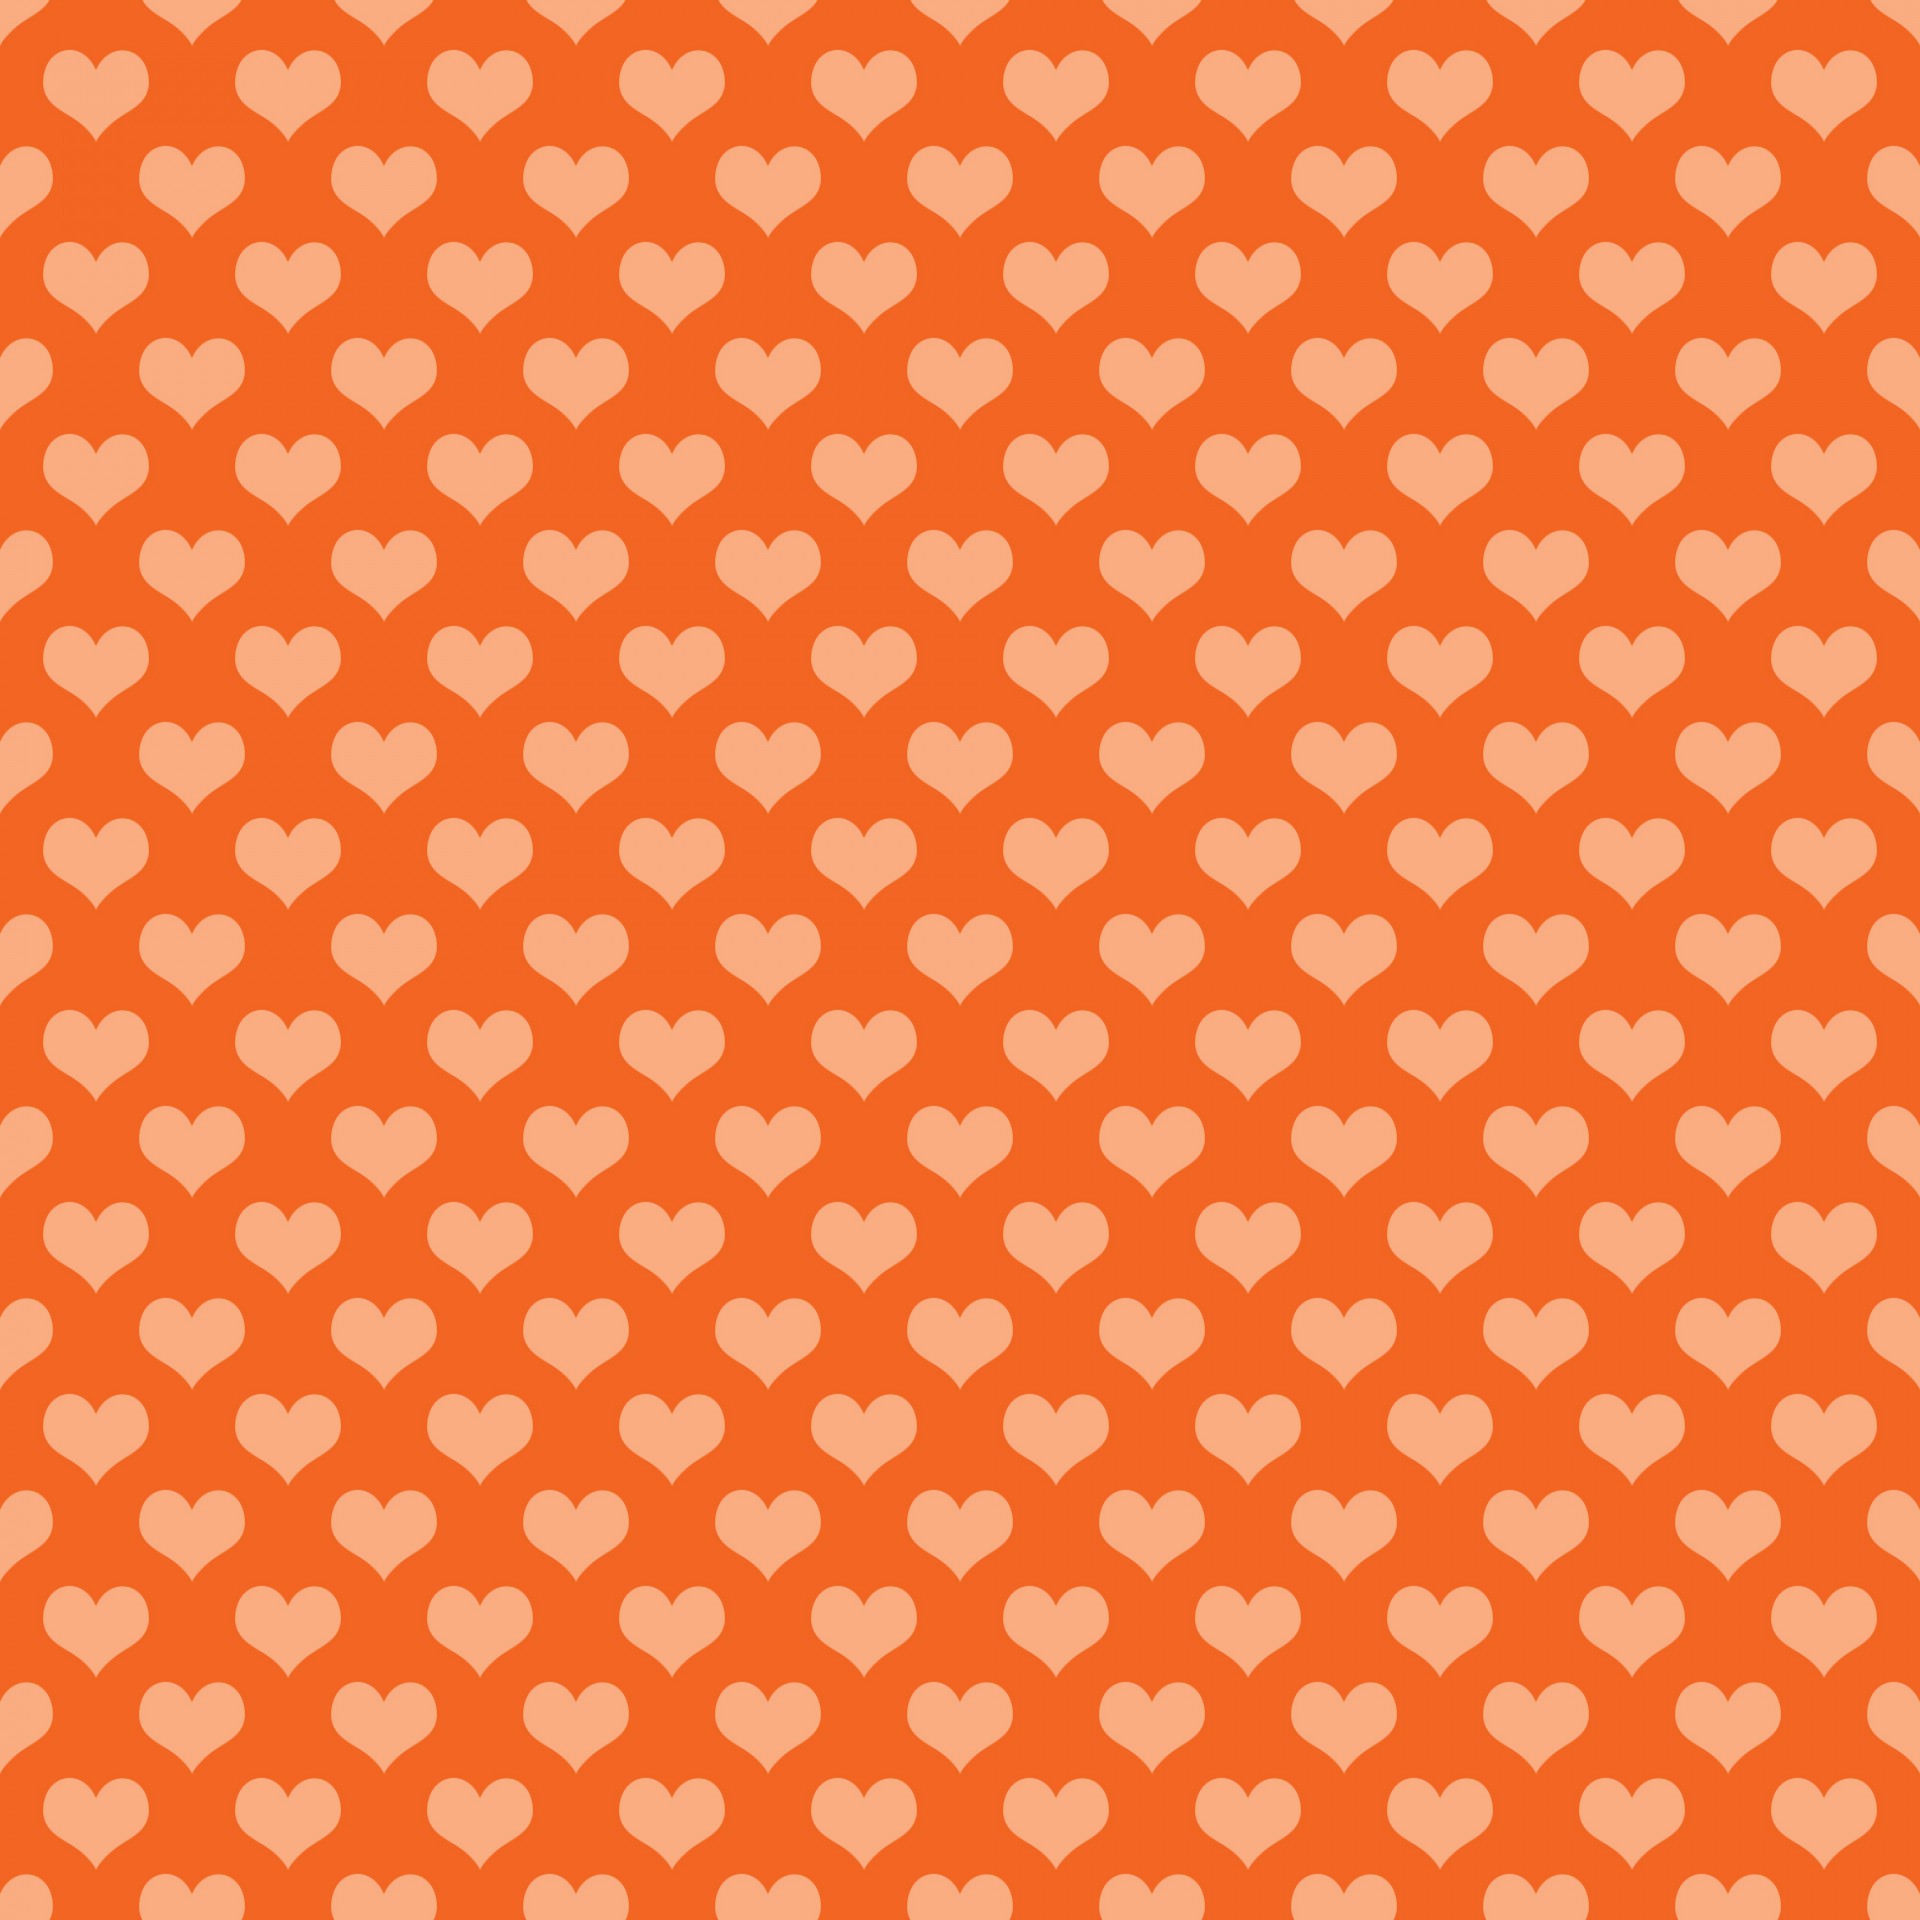 Hearts Background Wallpaper Orange Free Stock Photo Public